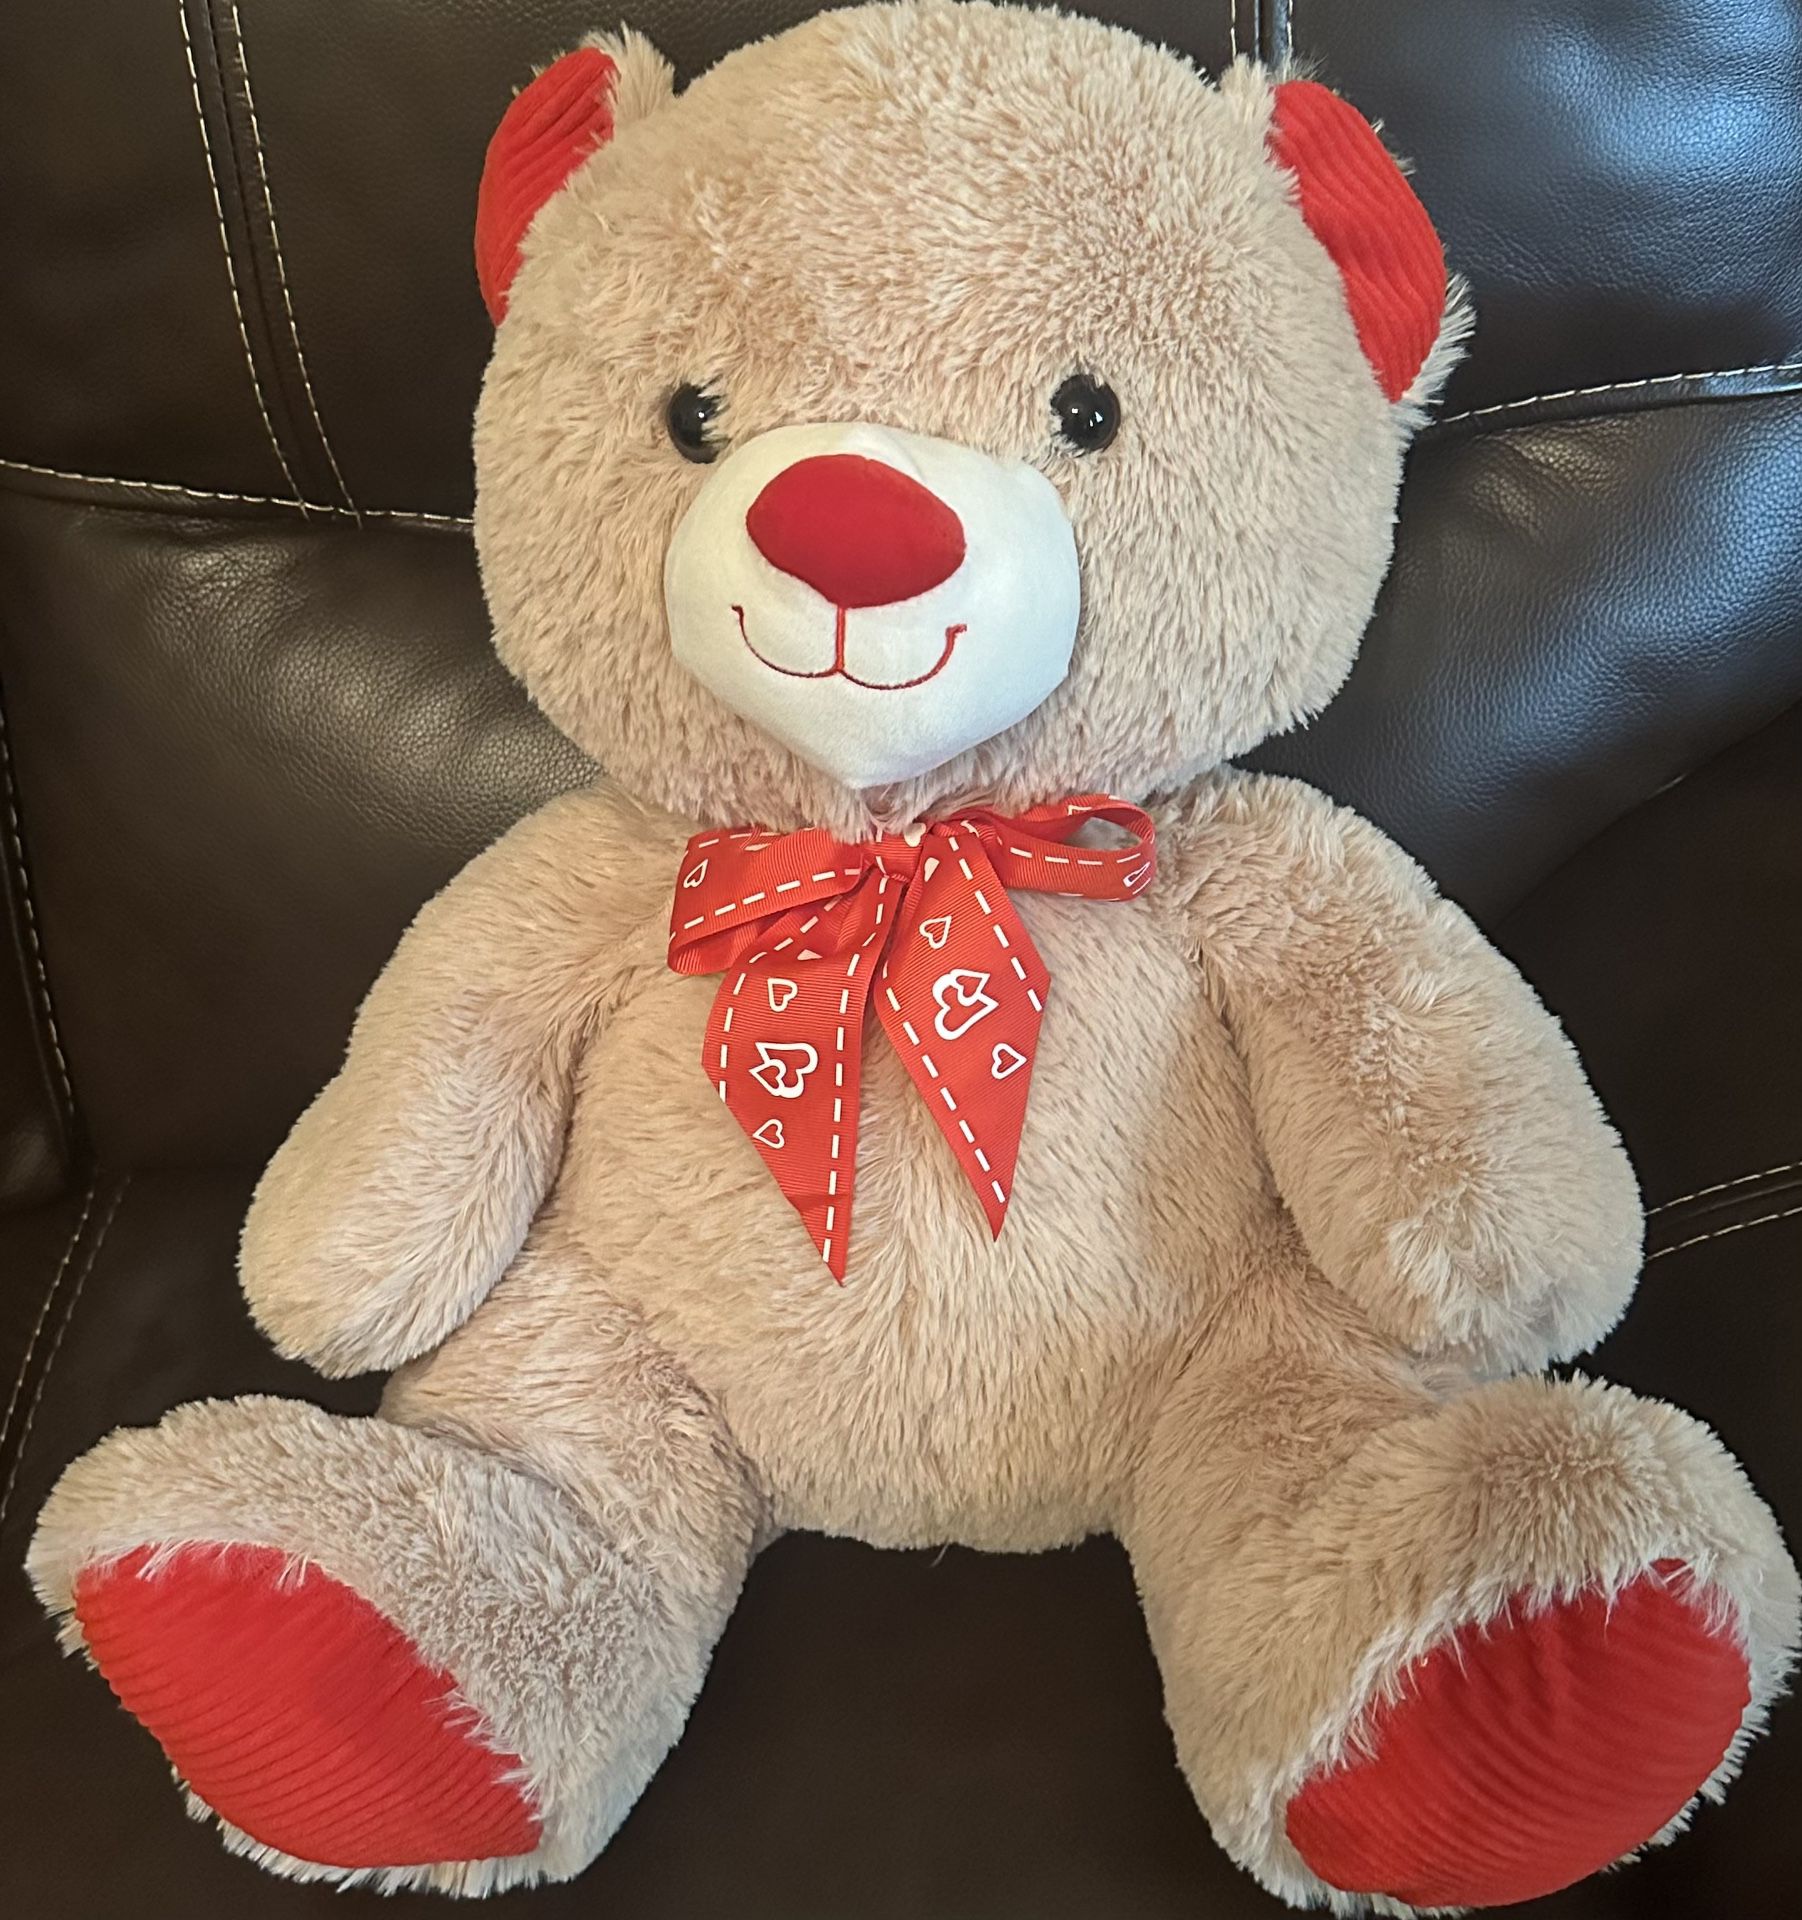 Teddy Bear/ Plush 